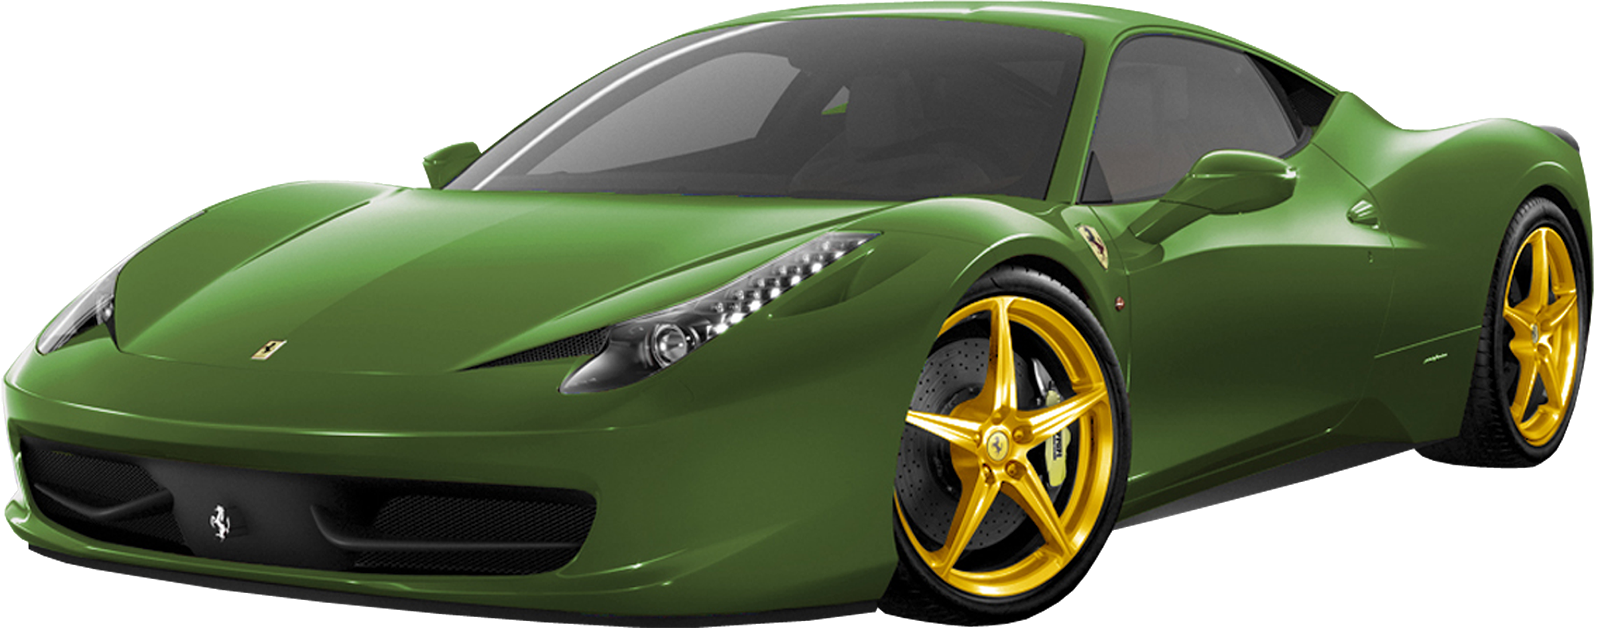 Grüner Ferrari